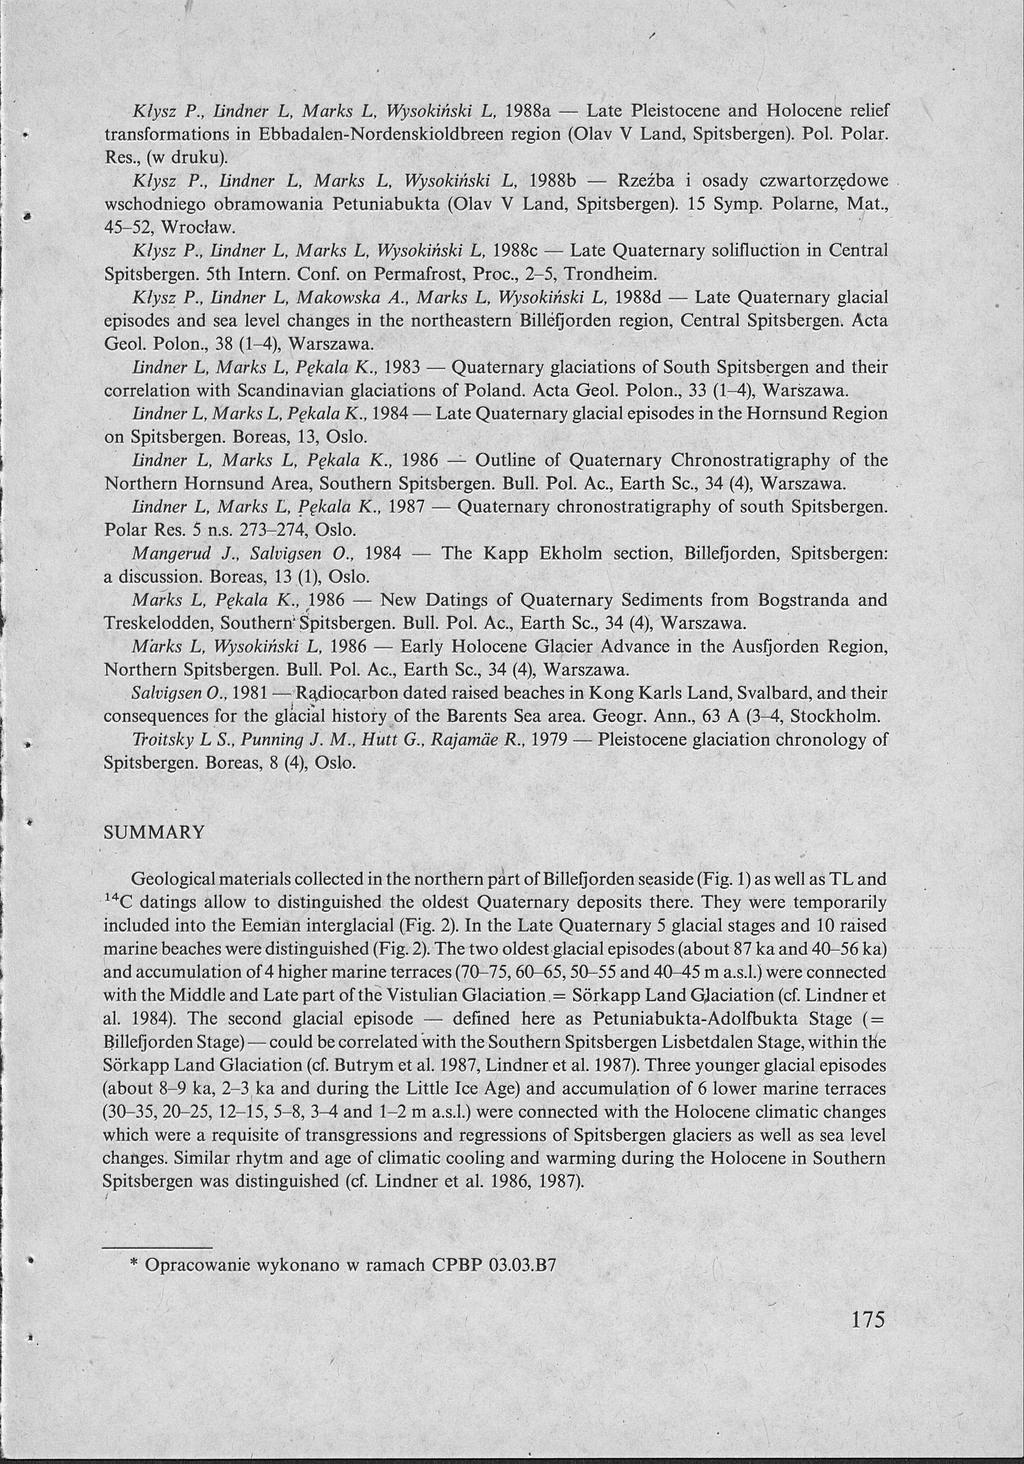 Klysz P., Lindner L, Marks L, Wysokiński L, 1988a Late Pleistocene and Holocene relief transformations in Ebbadalen-Nordenskioldbreen region (Olav V Land, Spitsbergen). Pol. Polar. Res., (w druku).